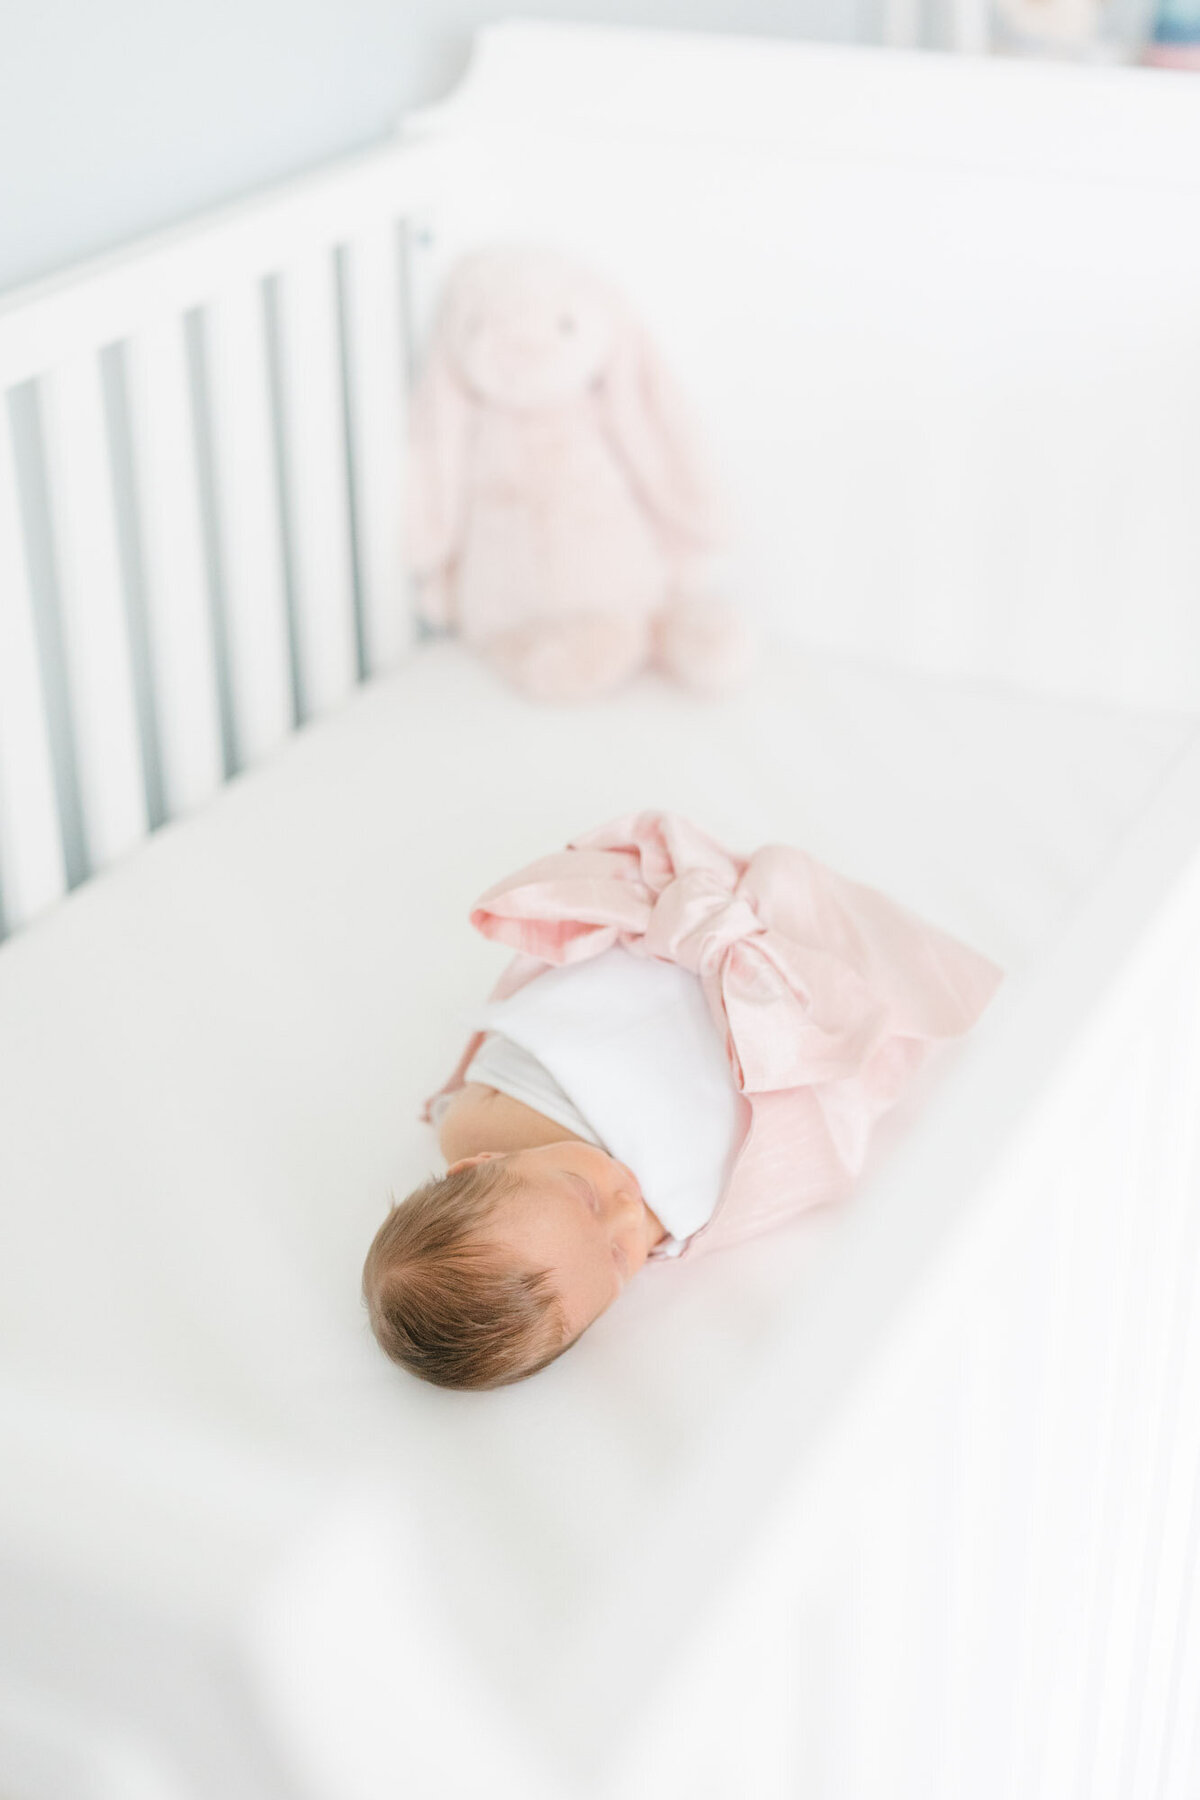 louisville-newborn-photographer-missy-marshall-37